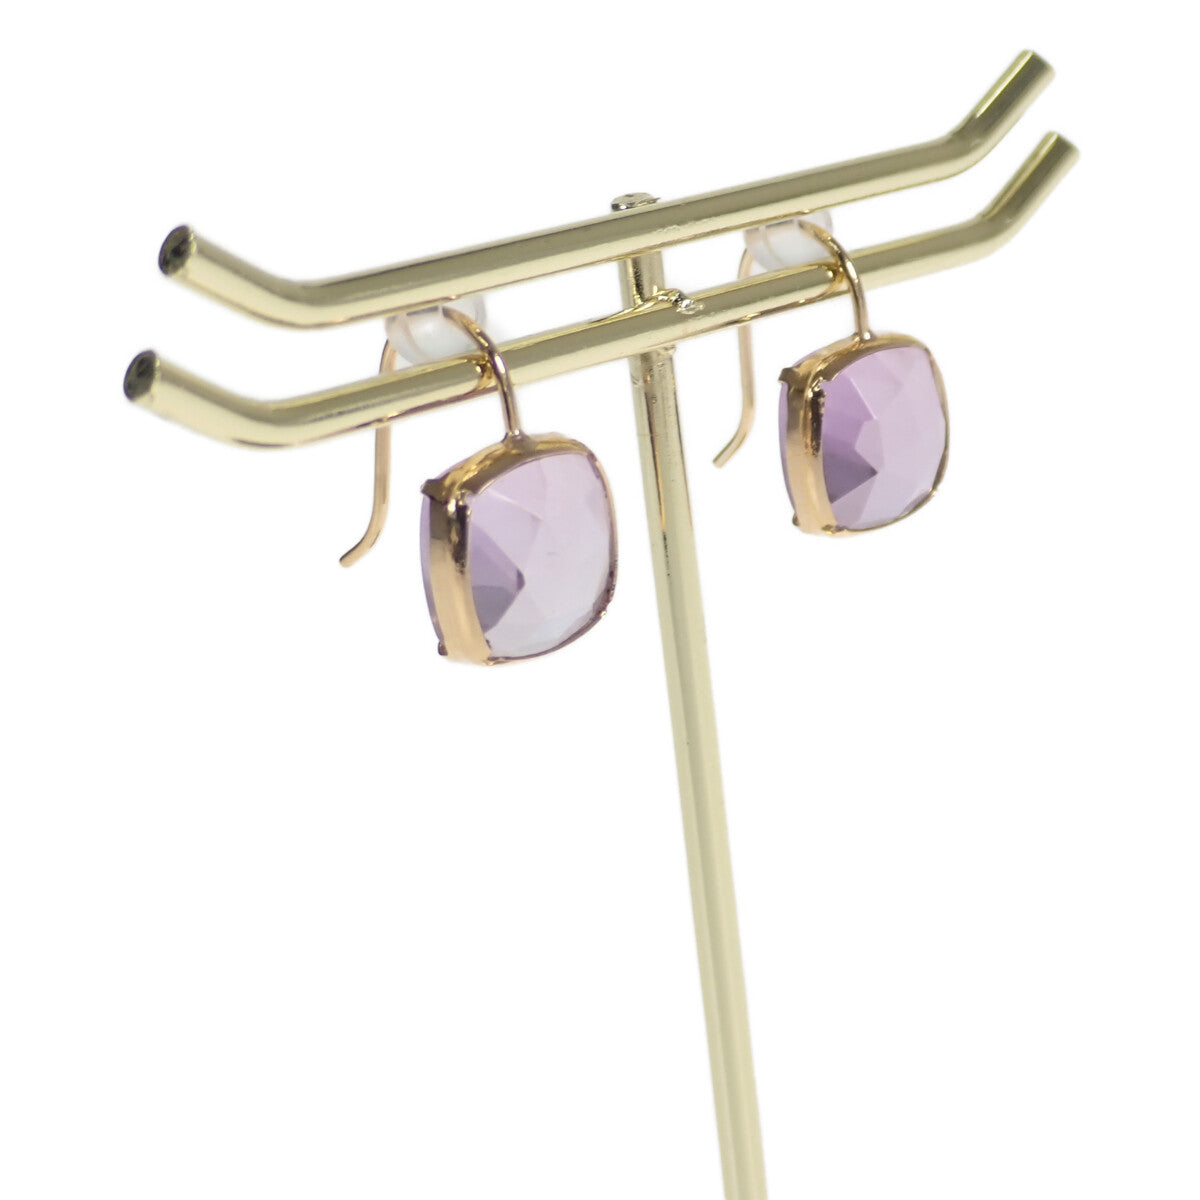 K18 Yellow Gold & Amethyst Square Design Earrings, Purple for Women - New & Unused